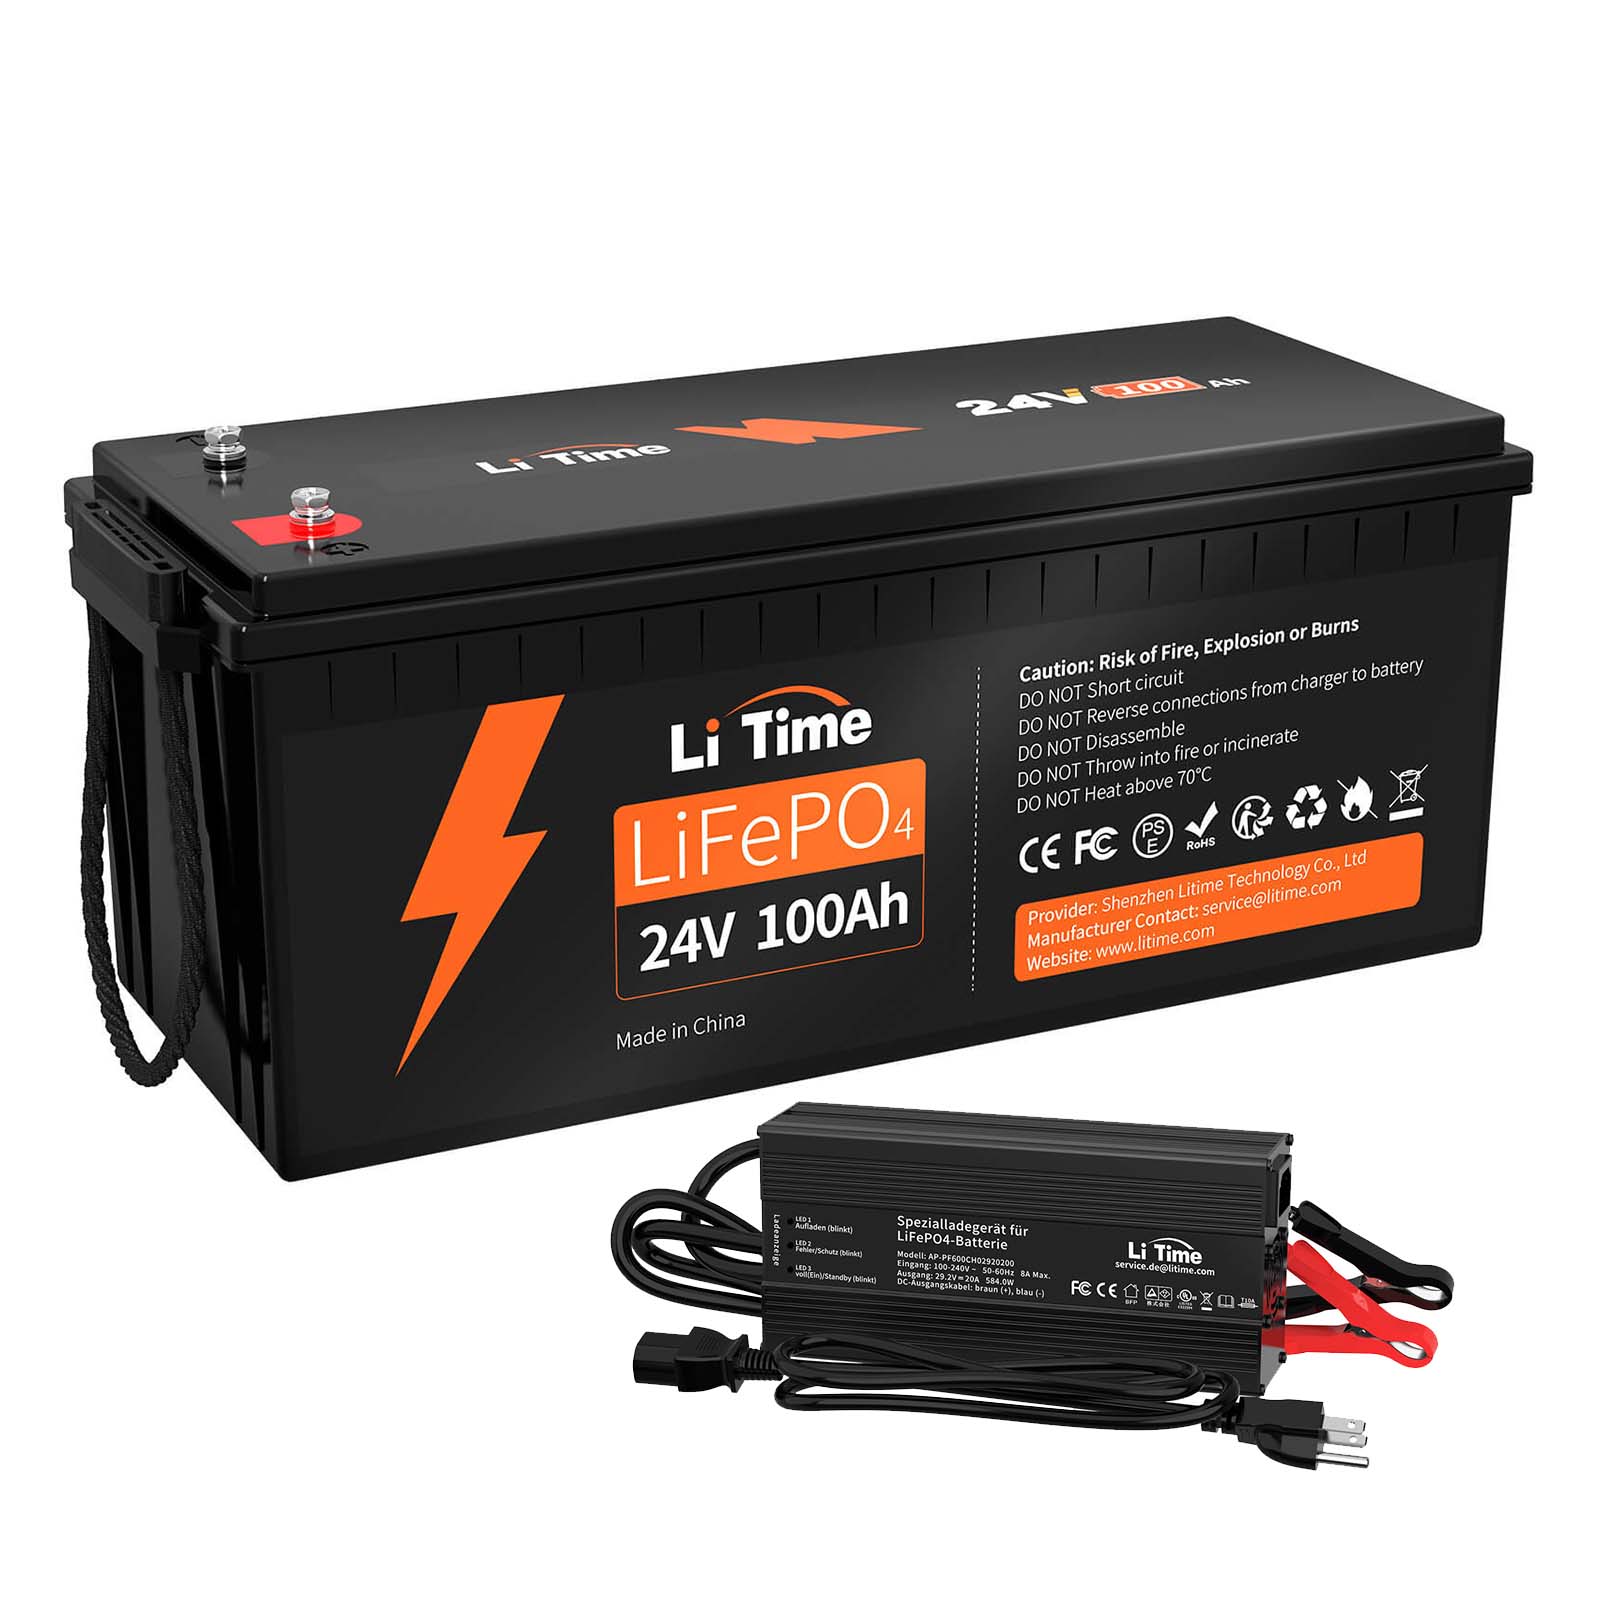 LiTime 24V 100Ah Lithium LiFePO4 battery – LiTime-DE